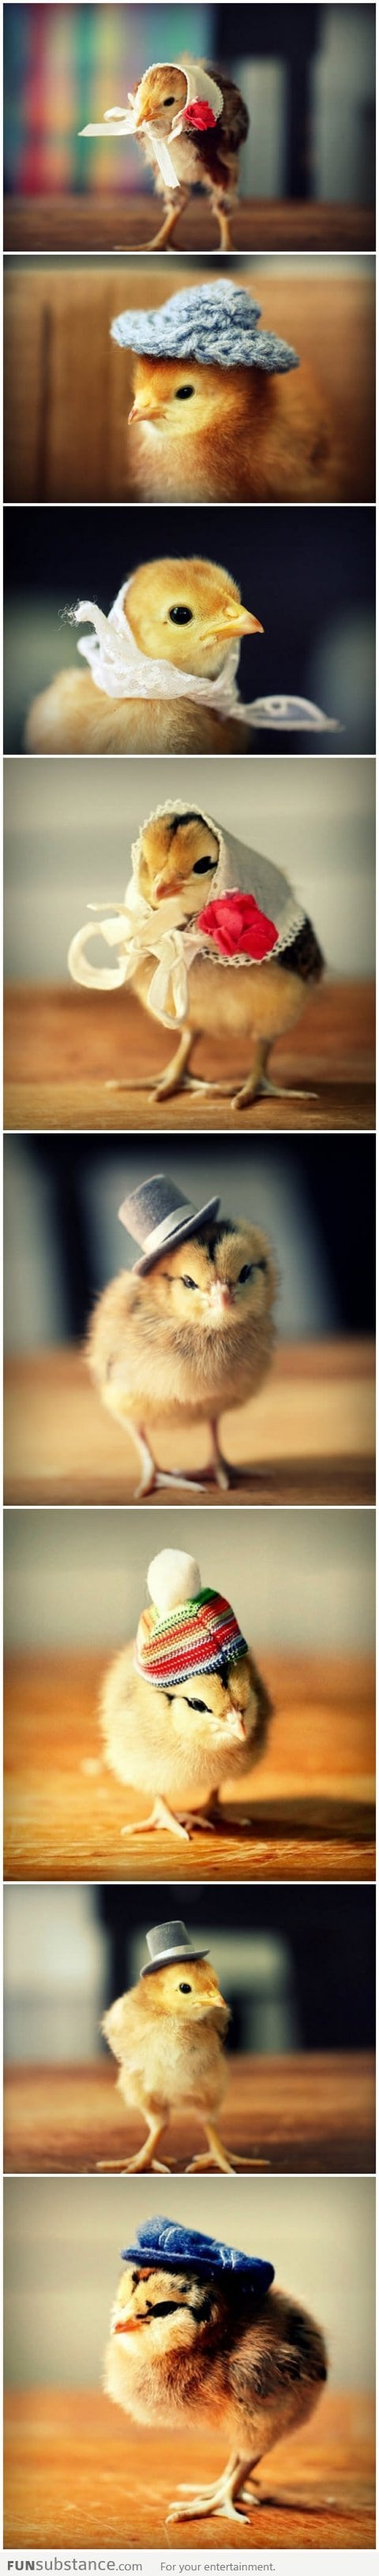 Cute baby chicks wearing hats